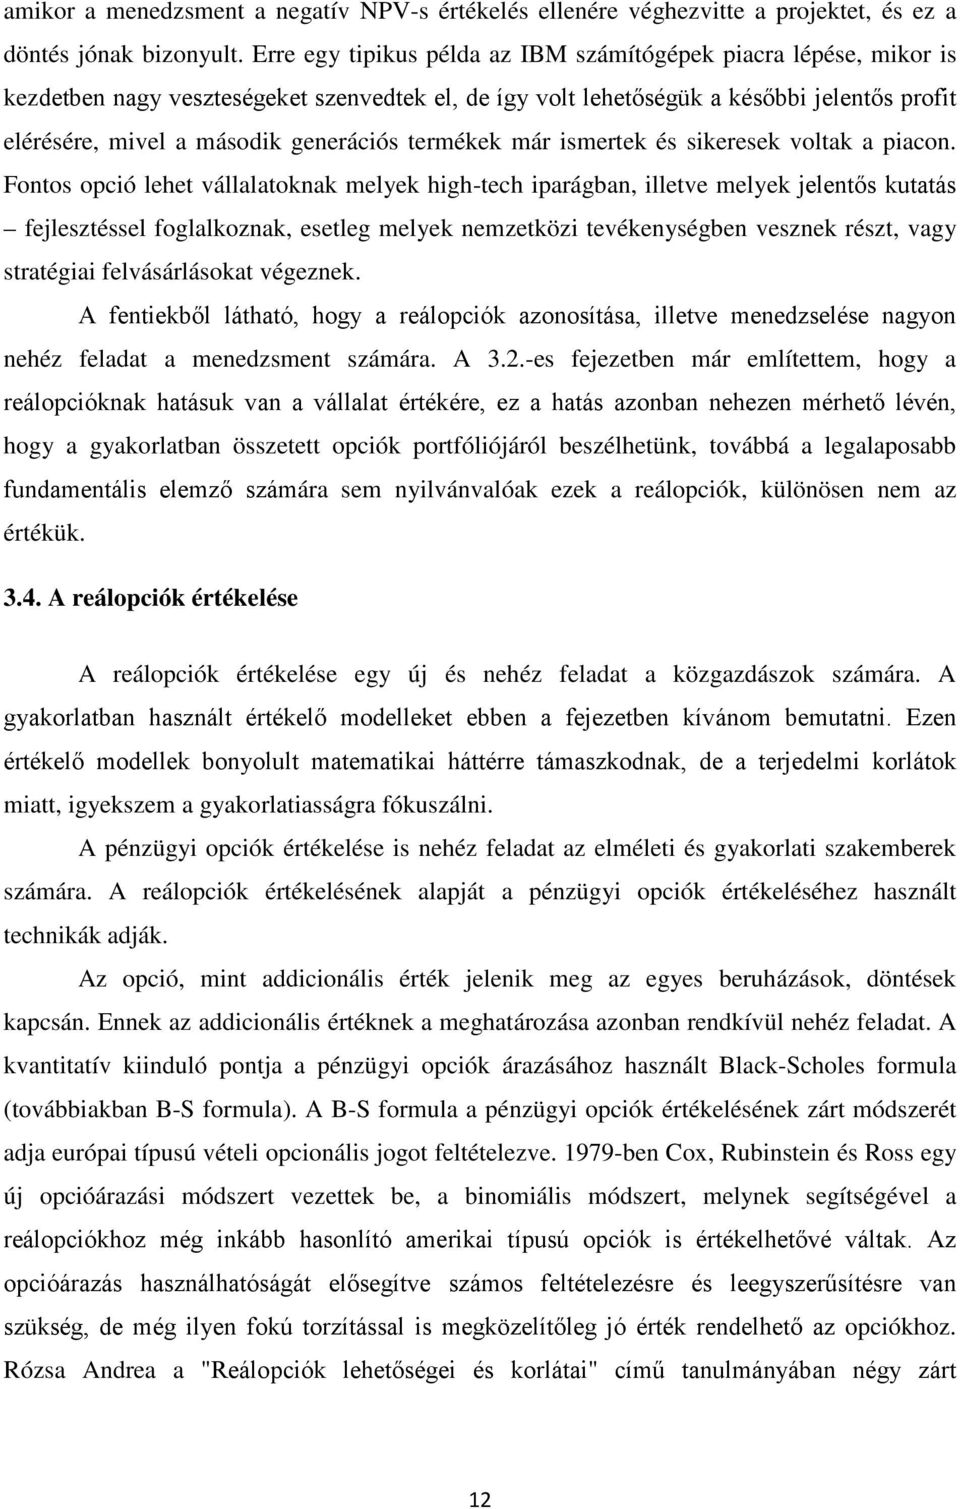 Letöltés: csapivivien_2013_4.pdf